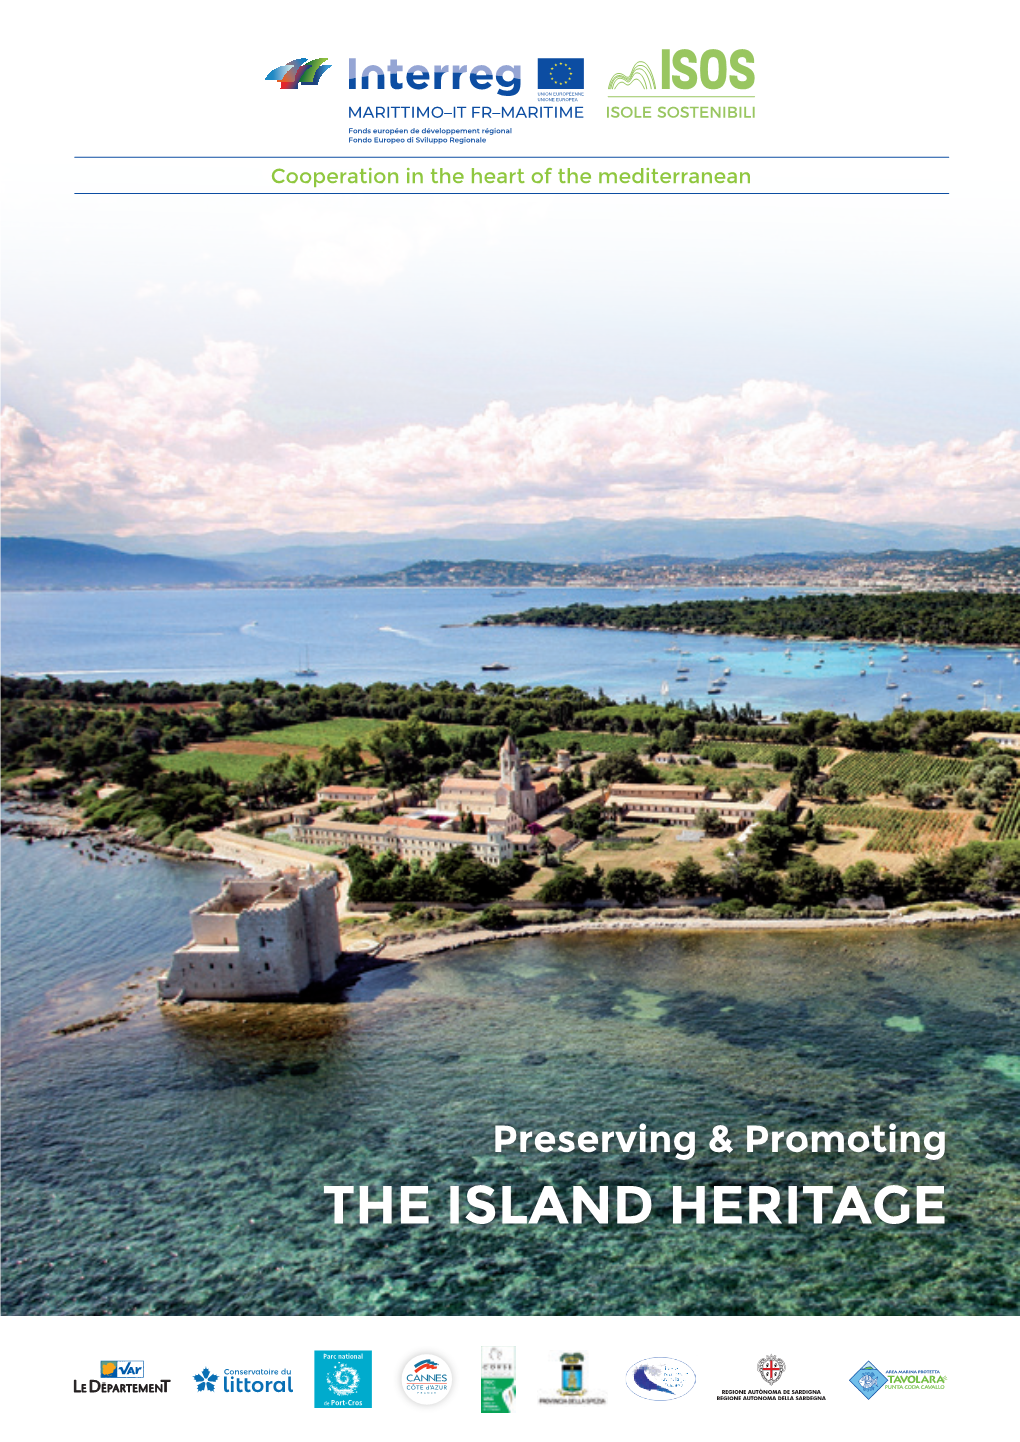 The Island Heritage